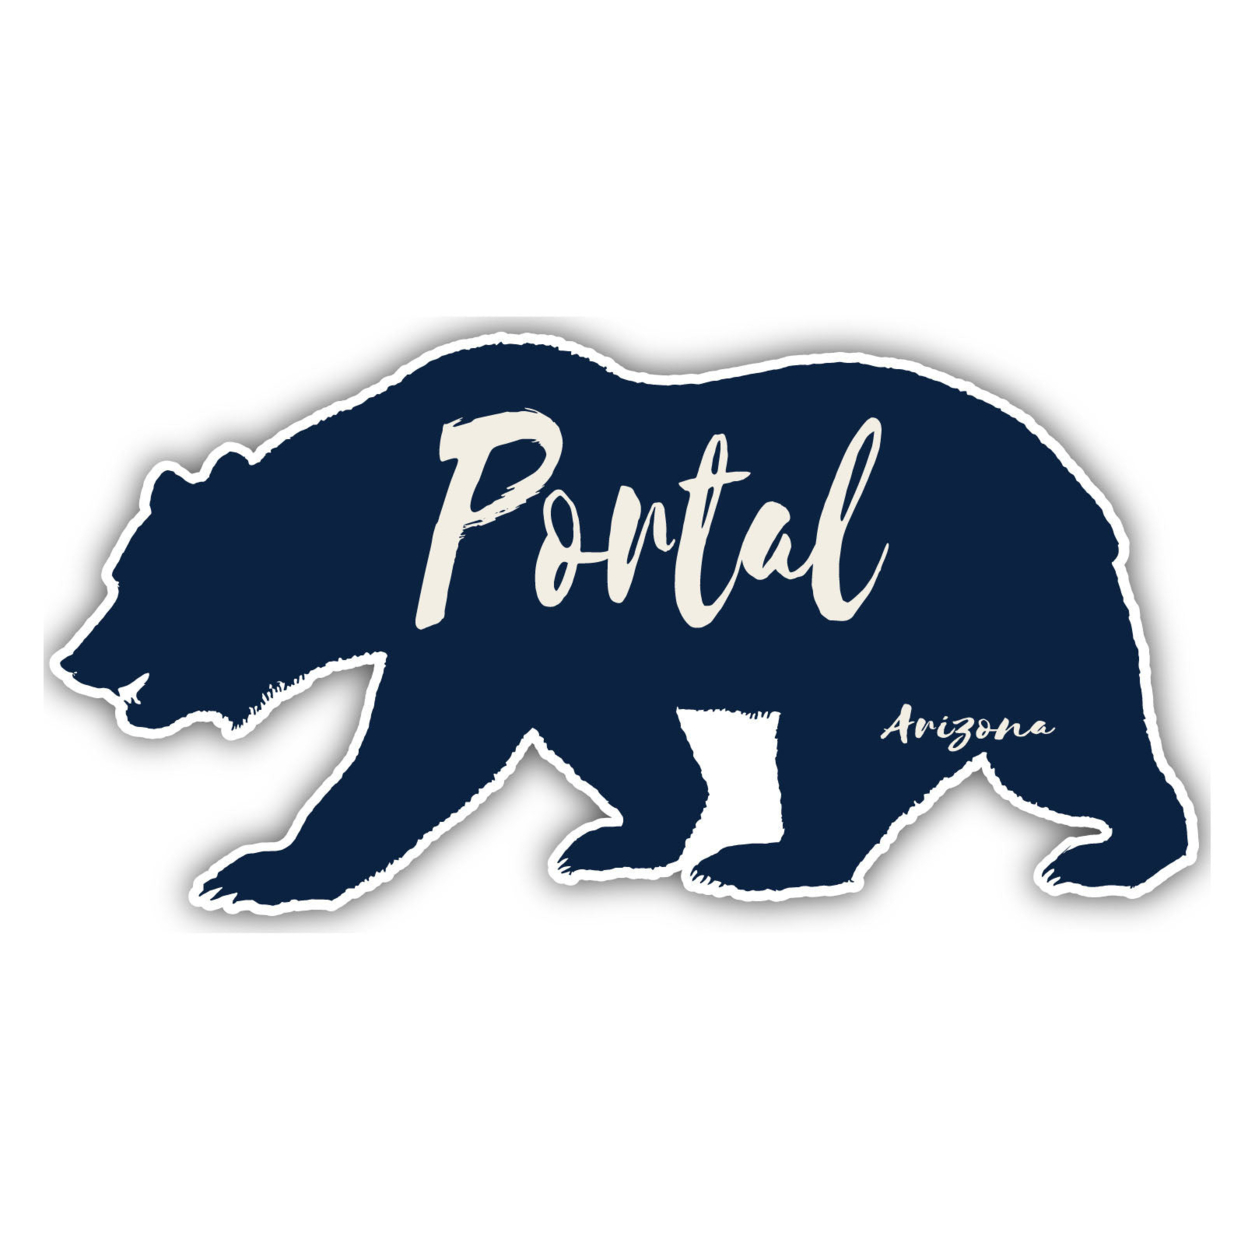 Portal Arizona Souvenir Decorative Stickers (Choose Theme And Size) - Single Unit, 4-Inch, Camp Life